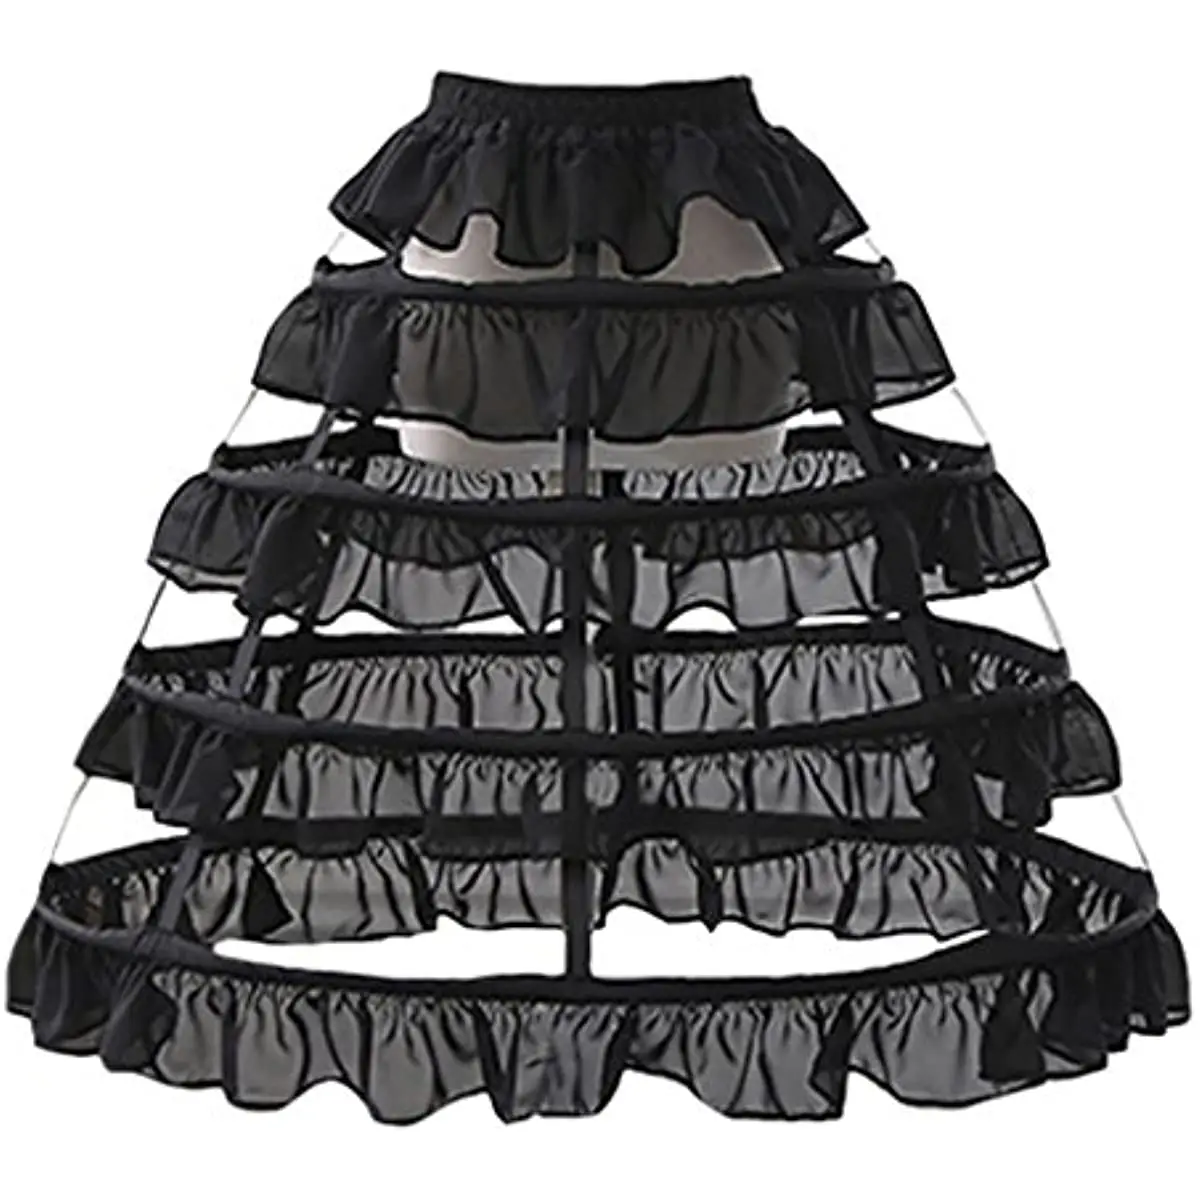 

Women's 4 Hoops Skirt Pannier Petticoat Crinoline Underskirt Bustle Cage